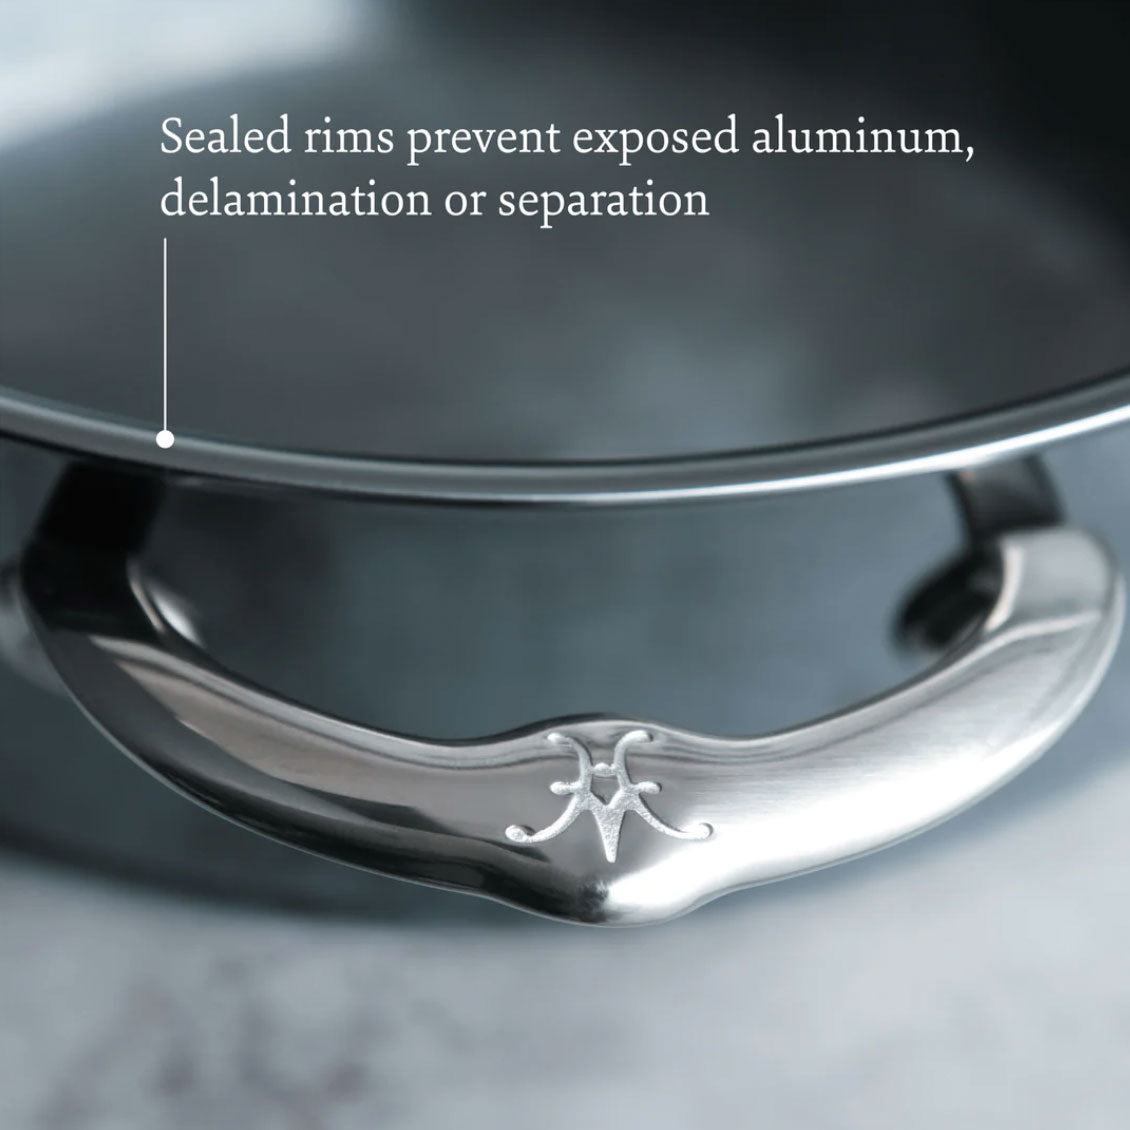 Hestan NanoBond Titanium Stainless Steel Sauce Pan, 2-Qt - Kitchen Universe